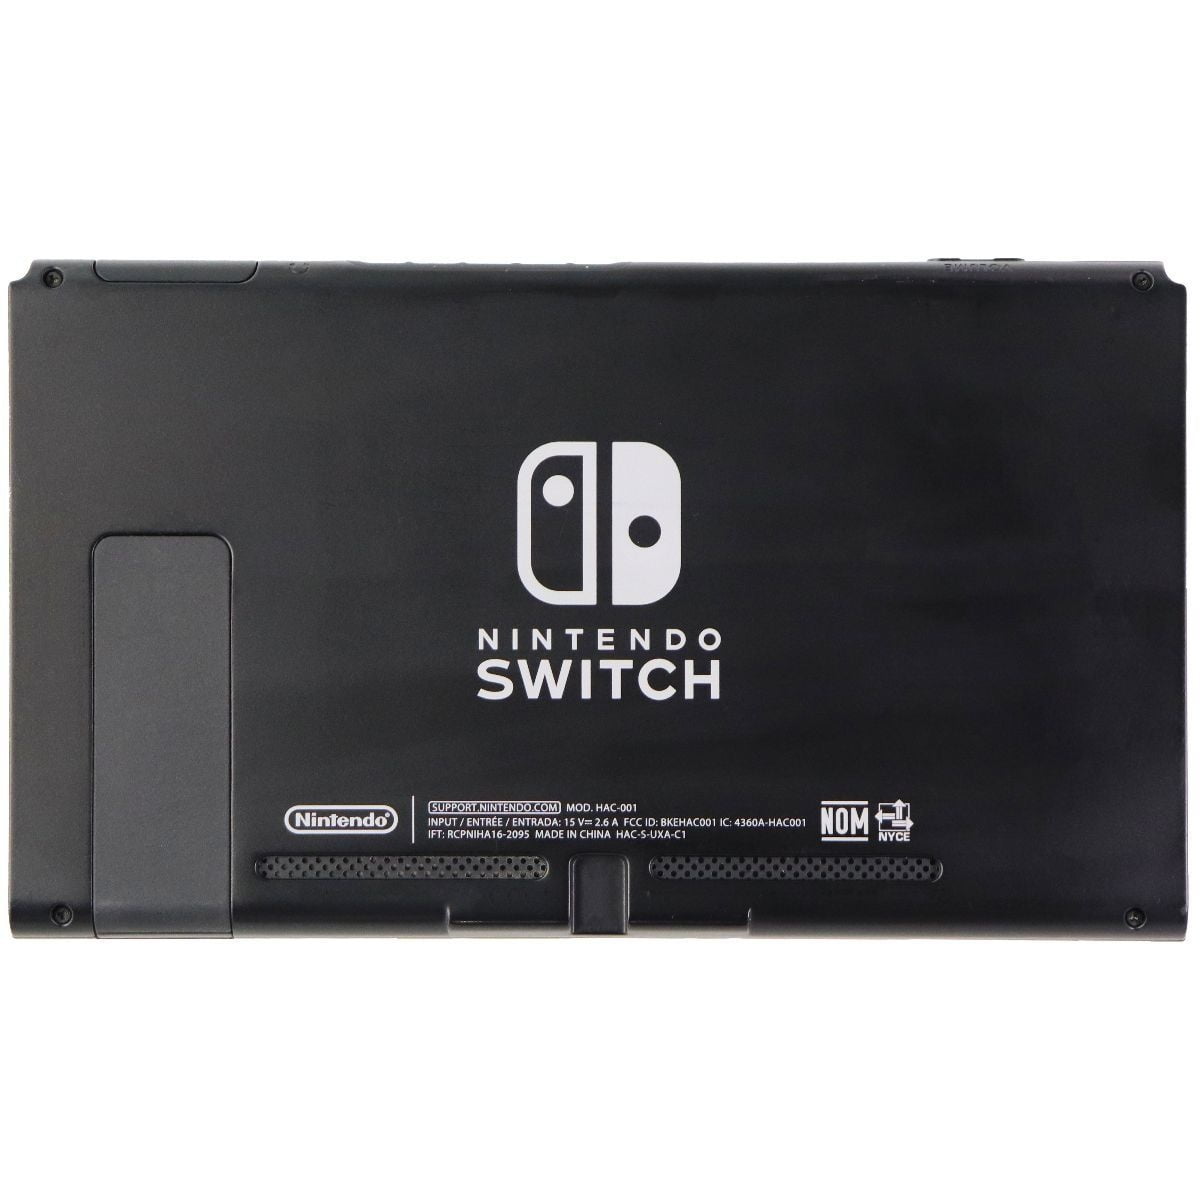 Nintendo Switch 32GB Video Game Console - Black (HAC-001 